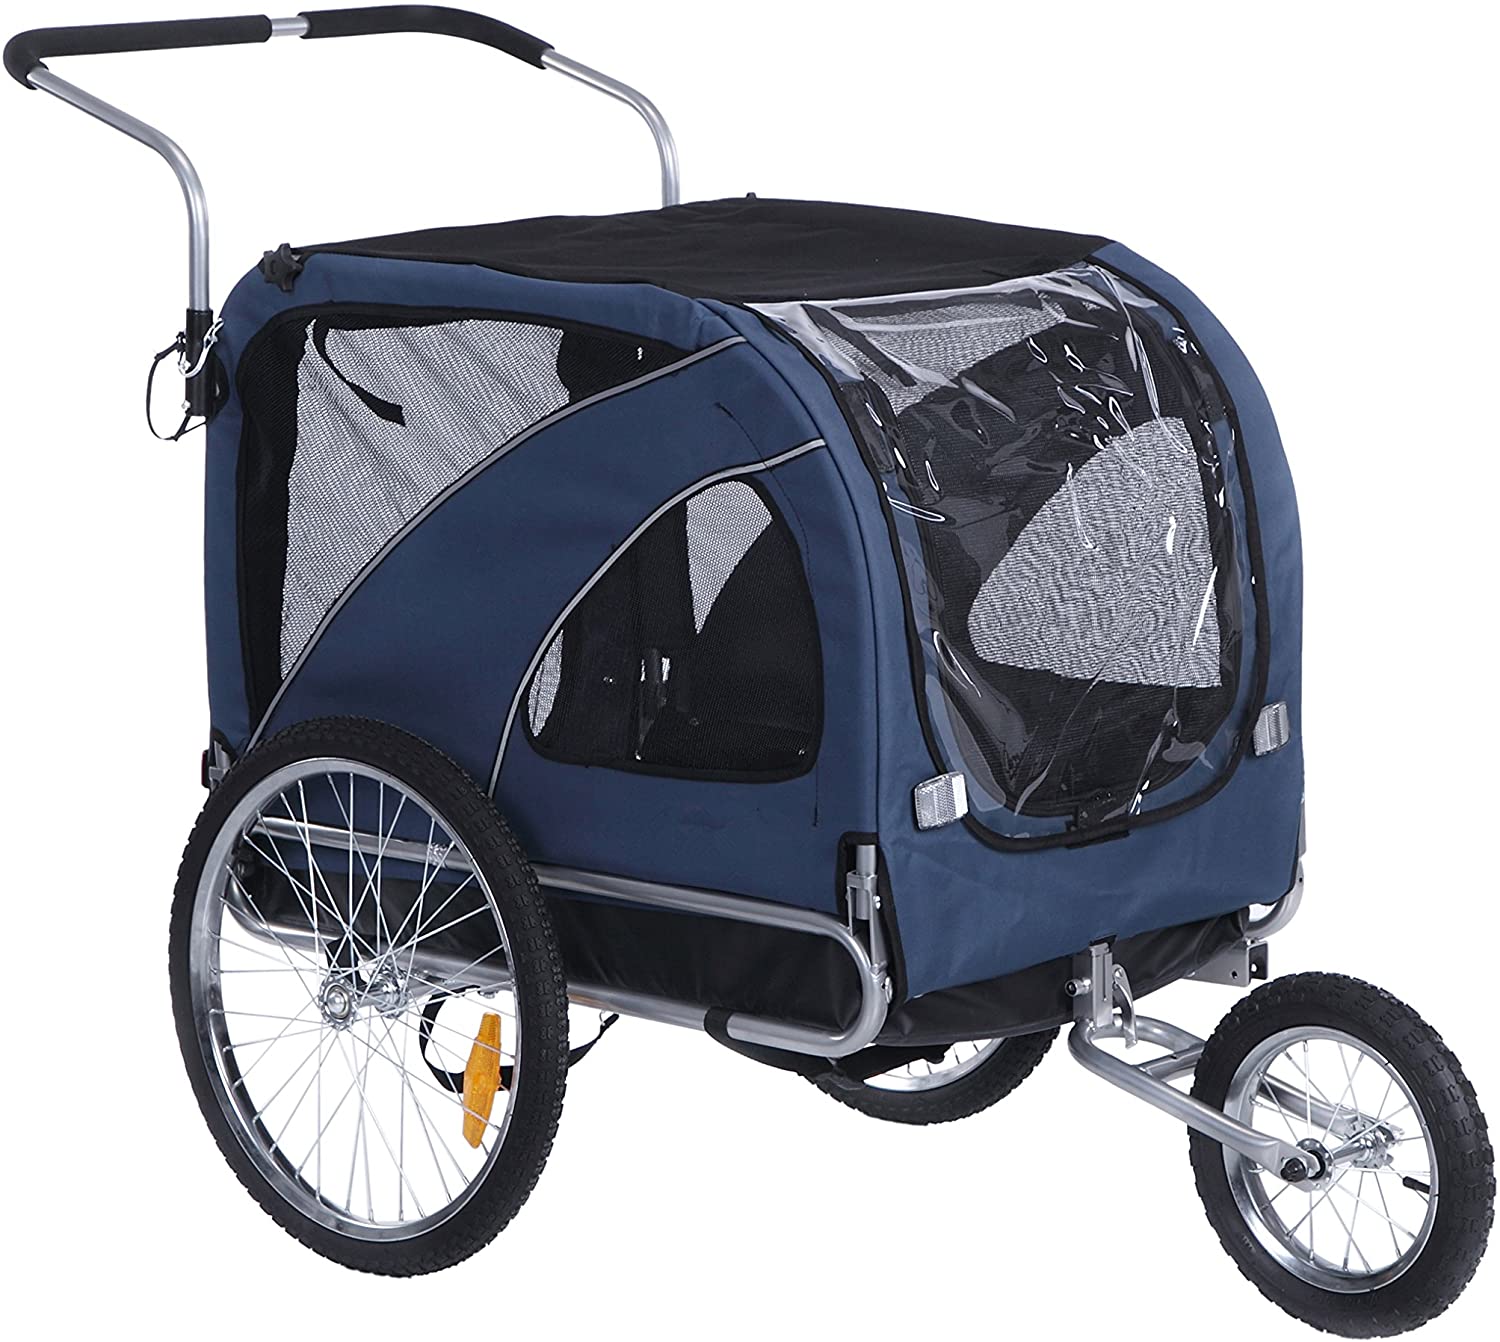  leonpets 2 en 1 mascotas Carrito de transporte para Jogger/remolque de bicicleta 10202 (Azul) 